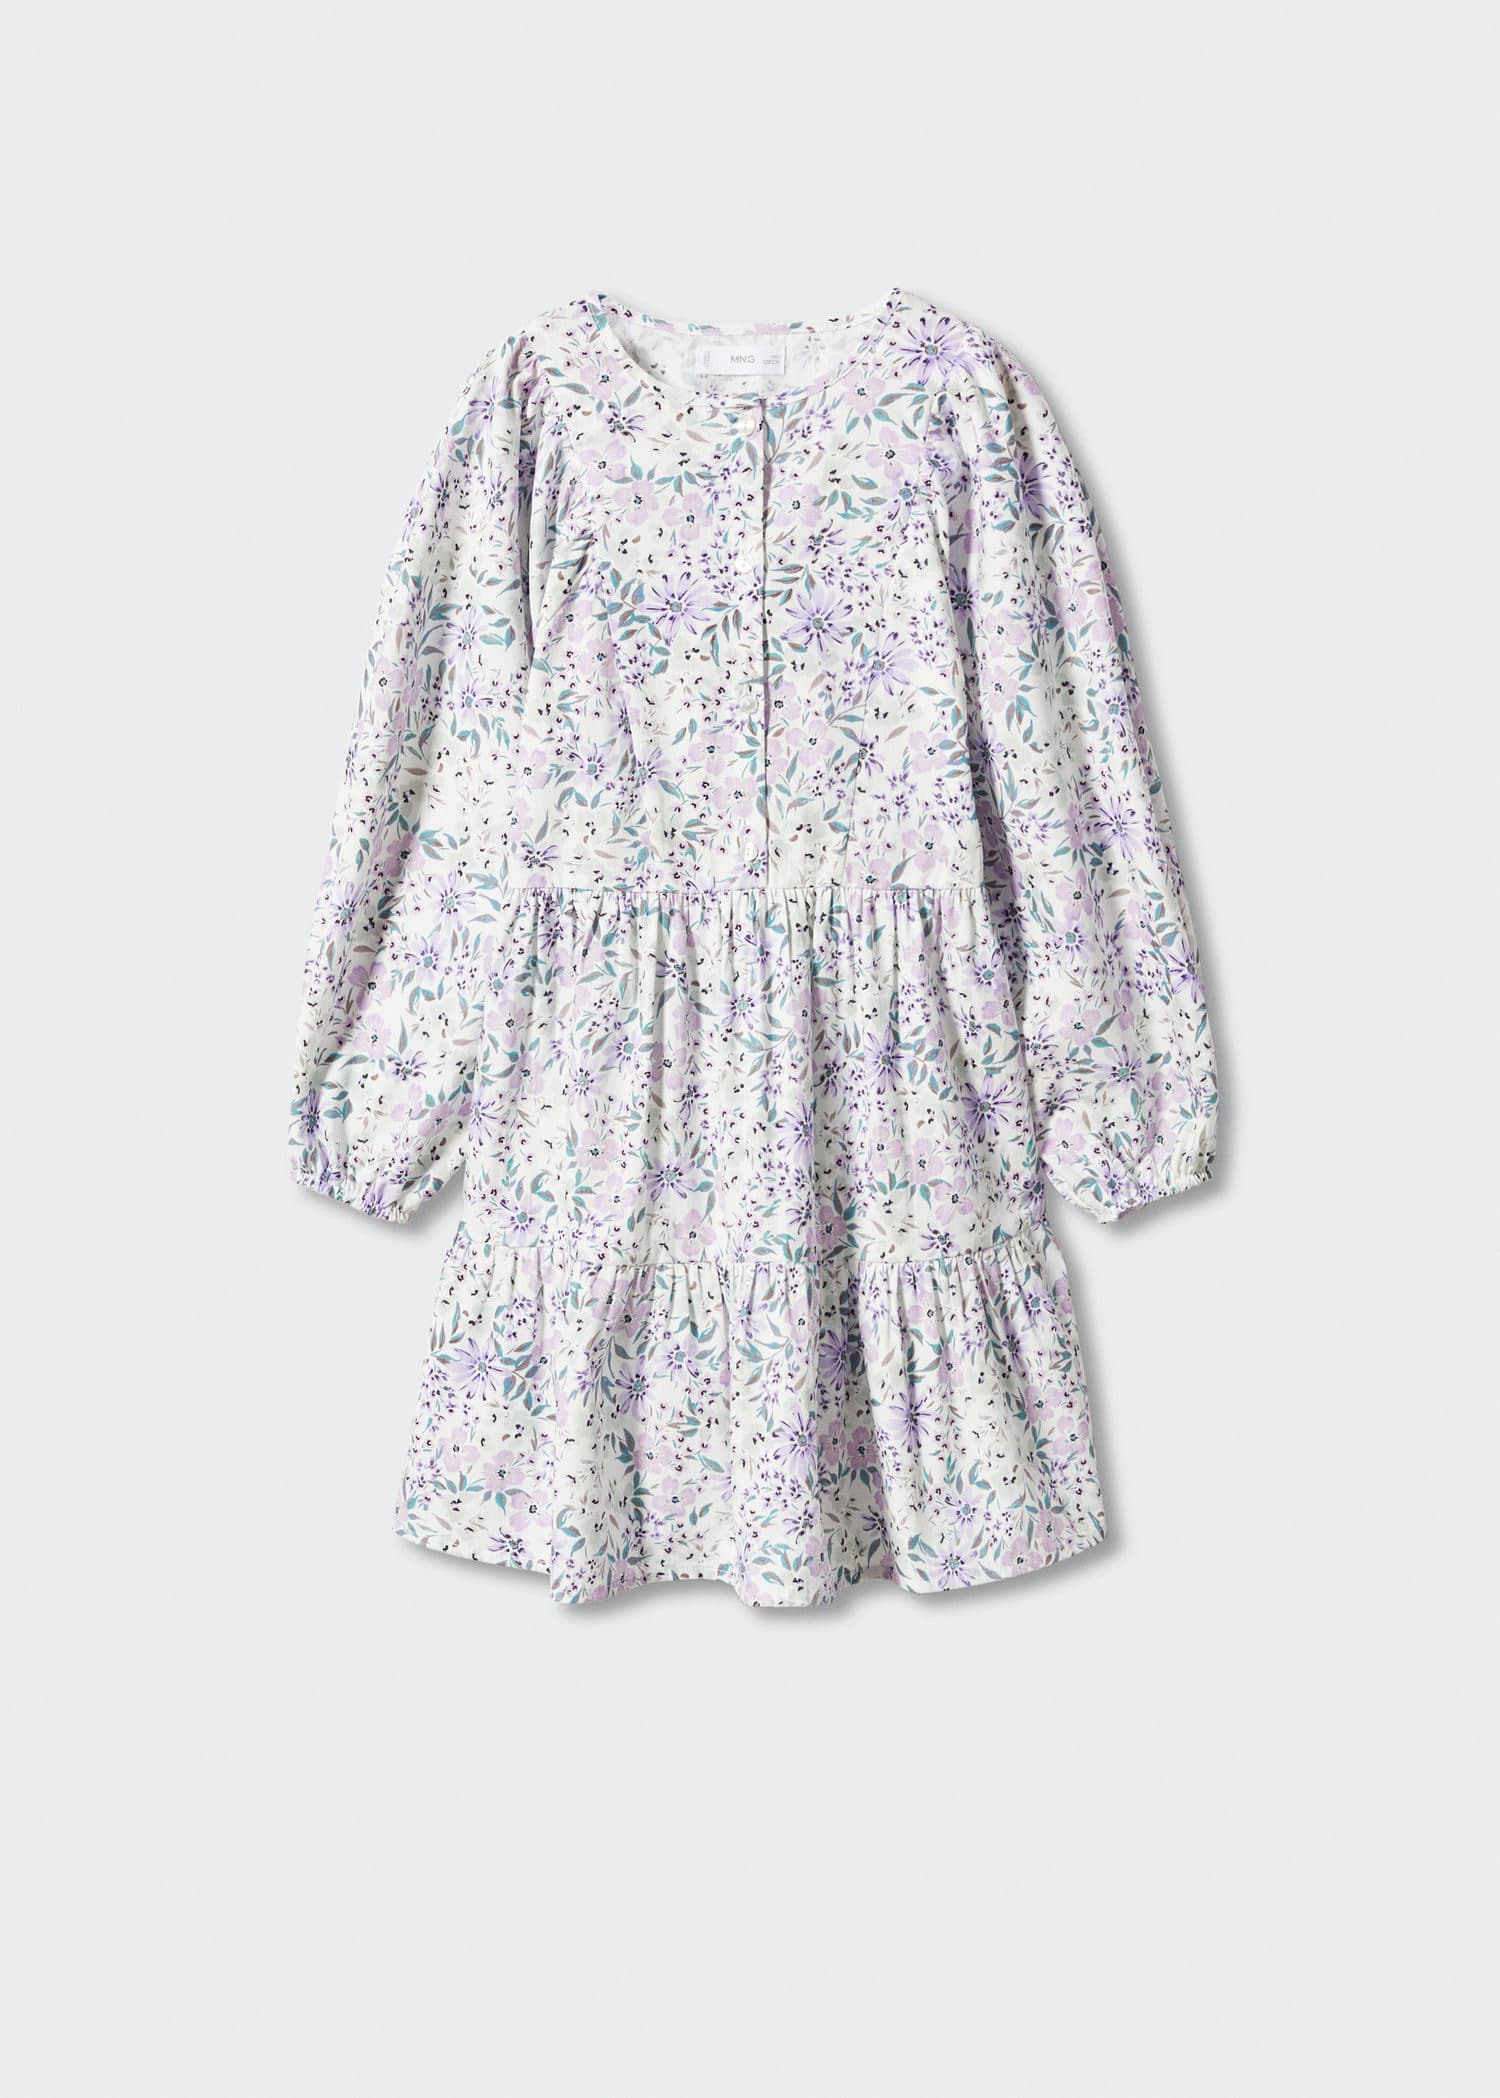 Flower print dress - Προϊόν χωρίς μοντέλο